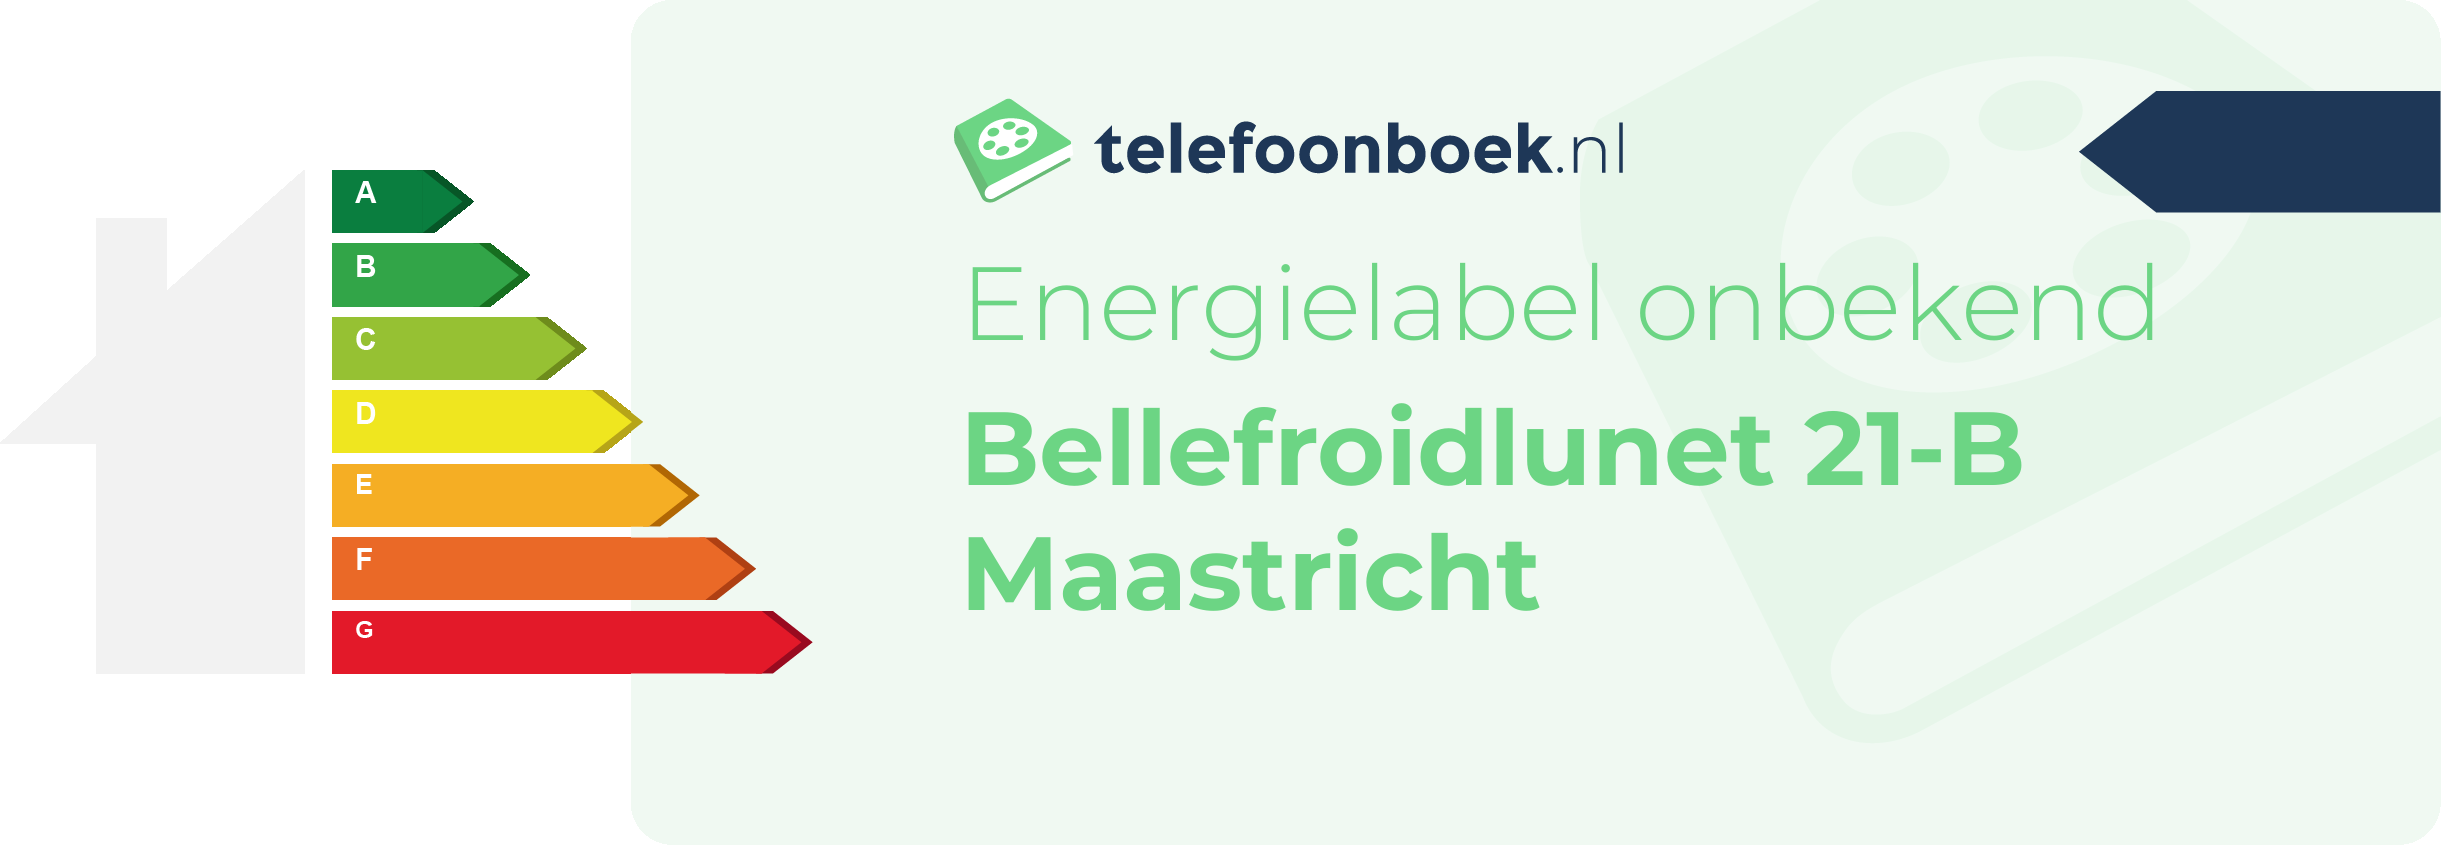 Energielabel Bellefroidlunet 21-B Maastricht